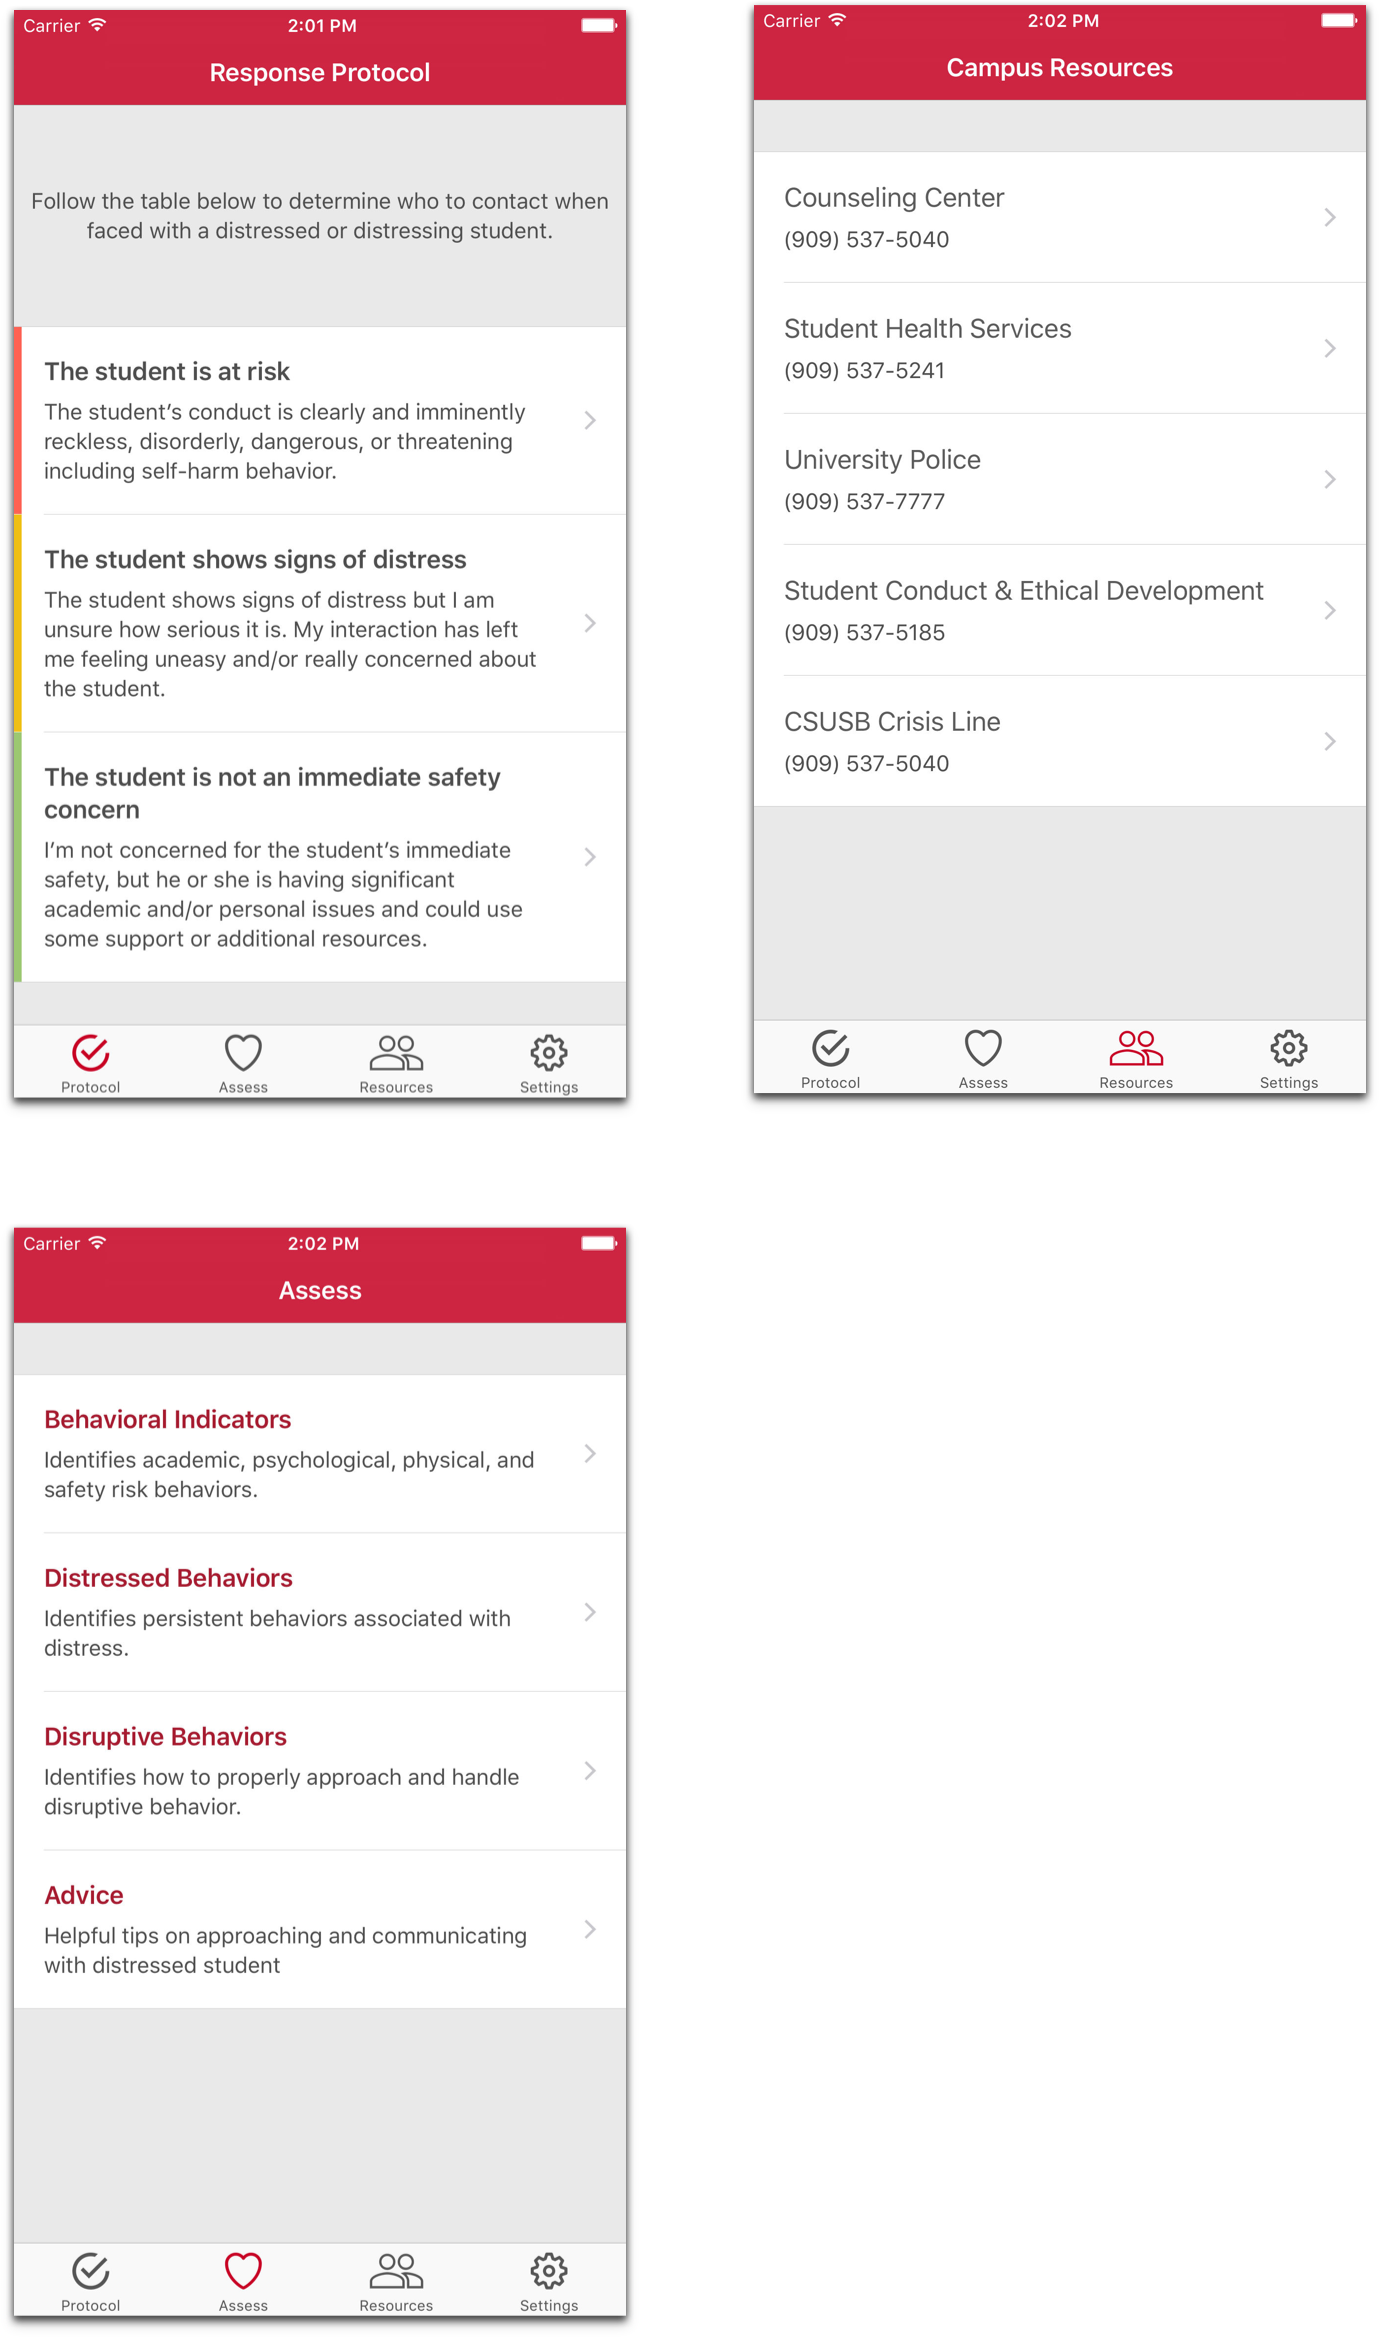 Gallery demonstrating main screens of red folder app.